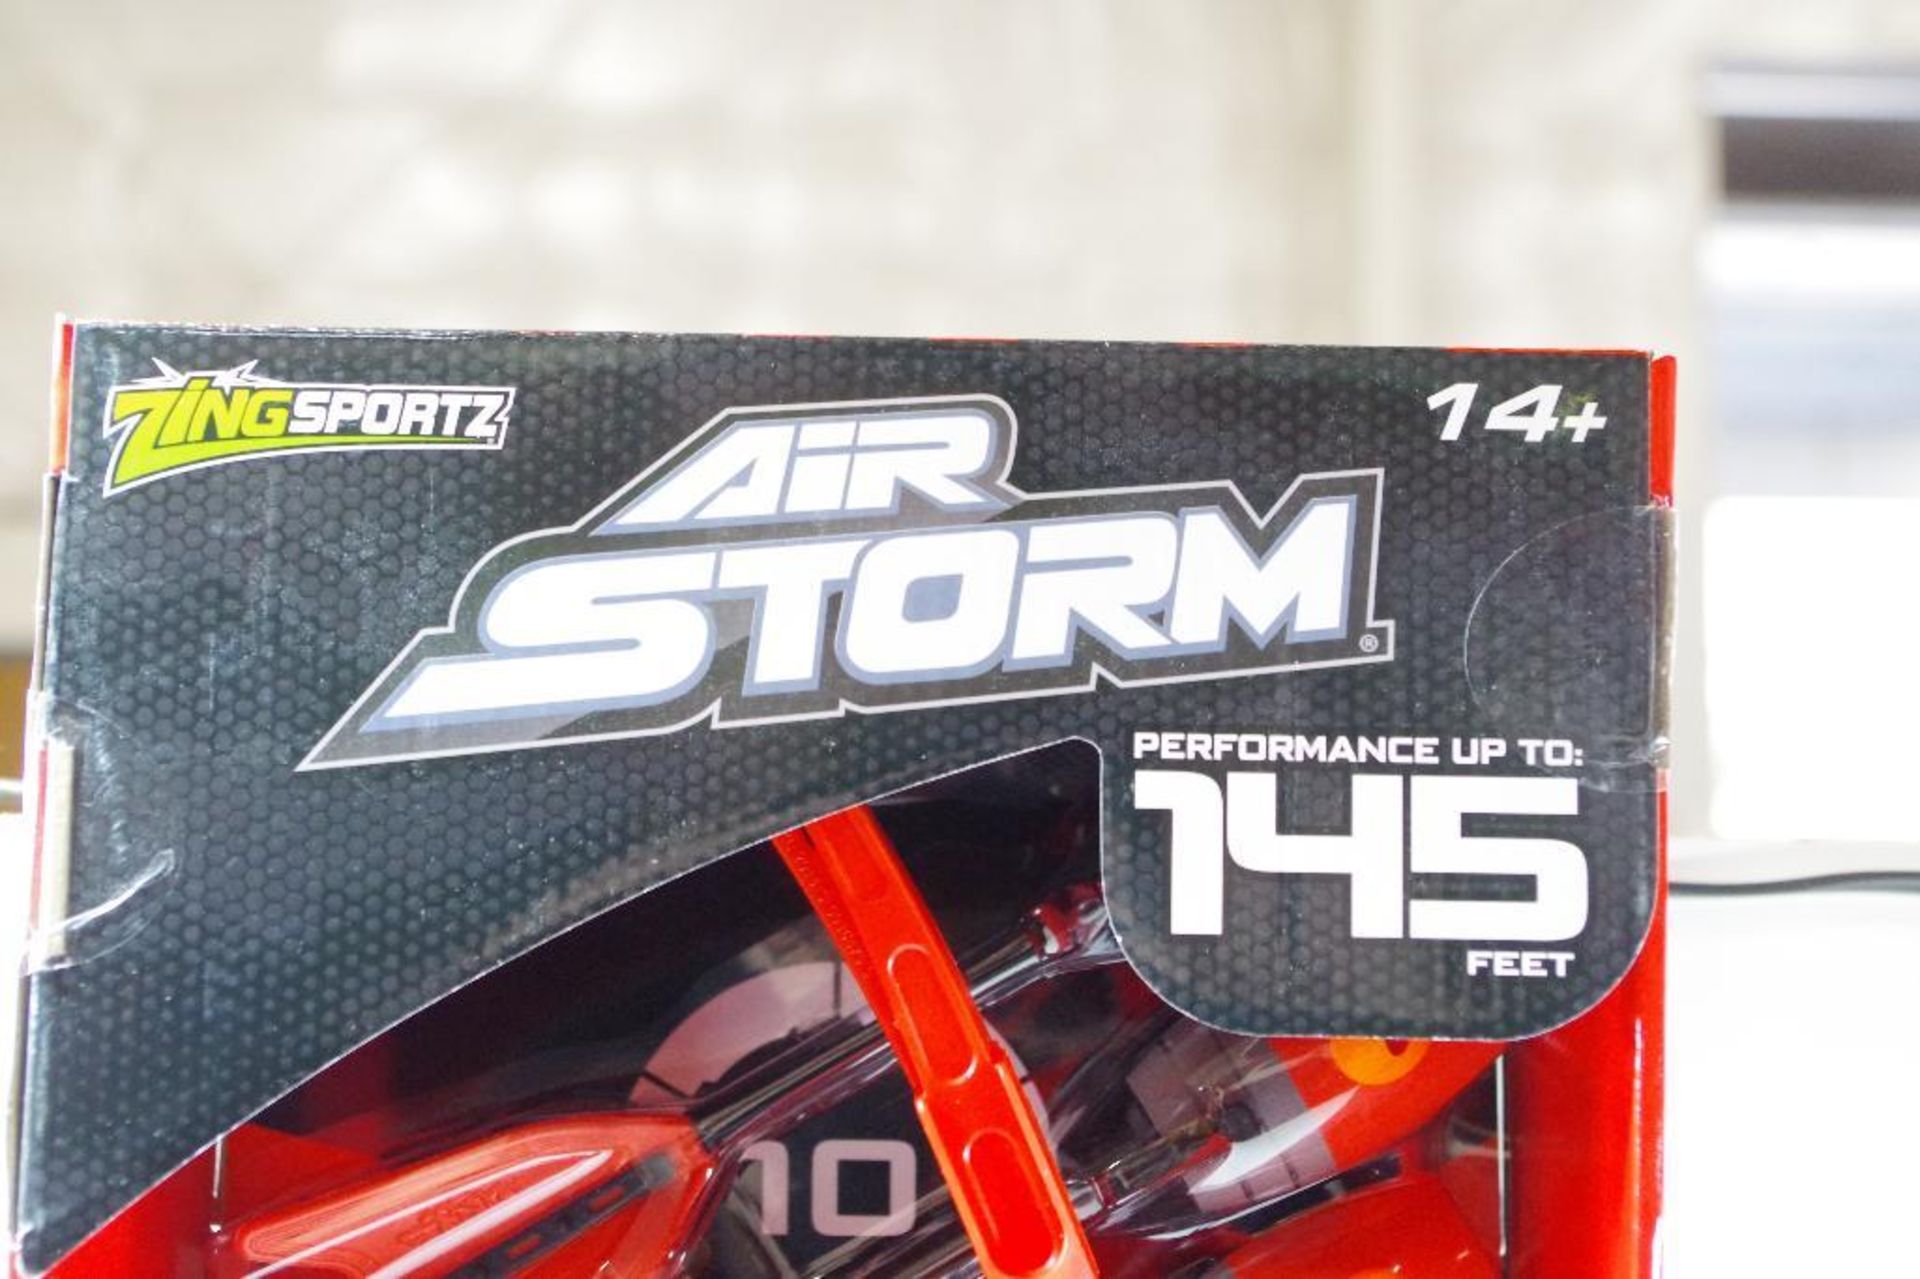 ZING SPORTZ Air Storm Z-TEK Bow and Arrow Set - Image 2 of 3